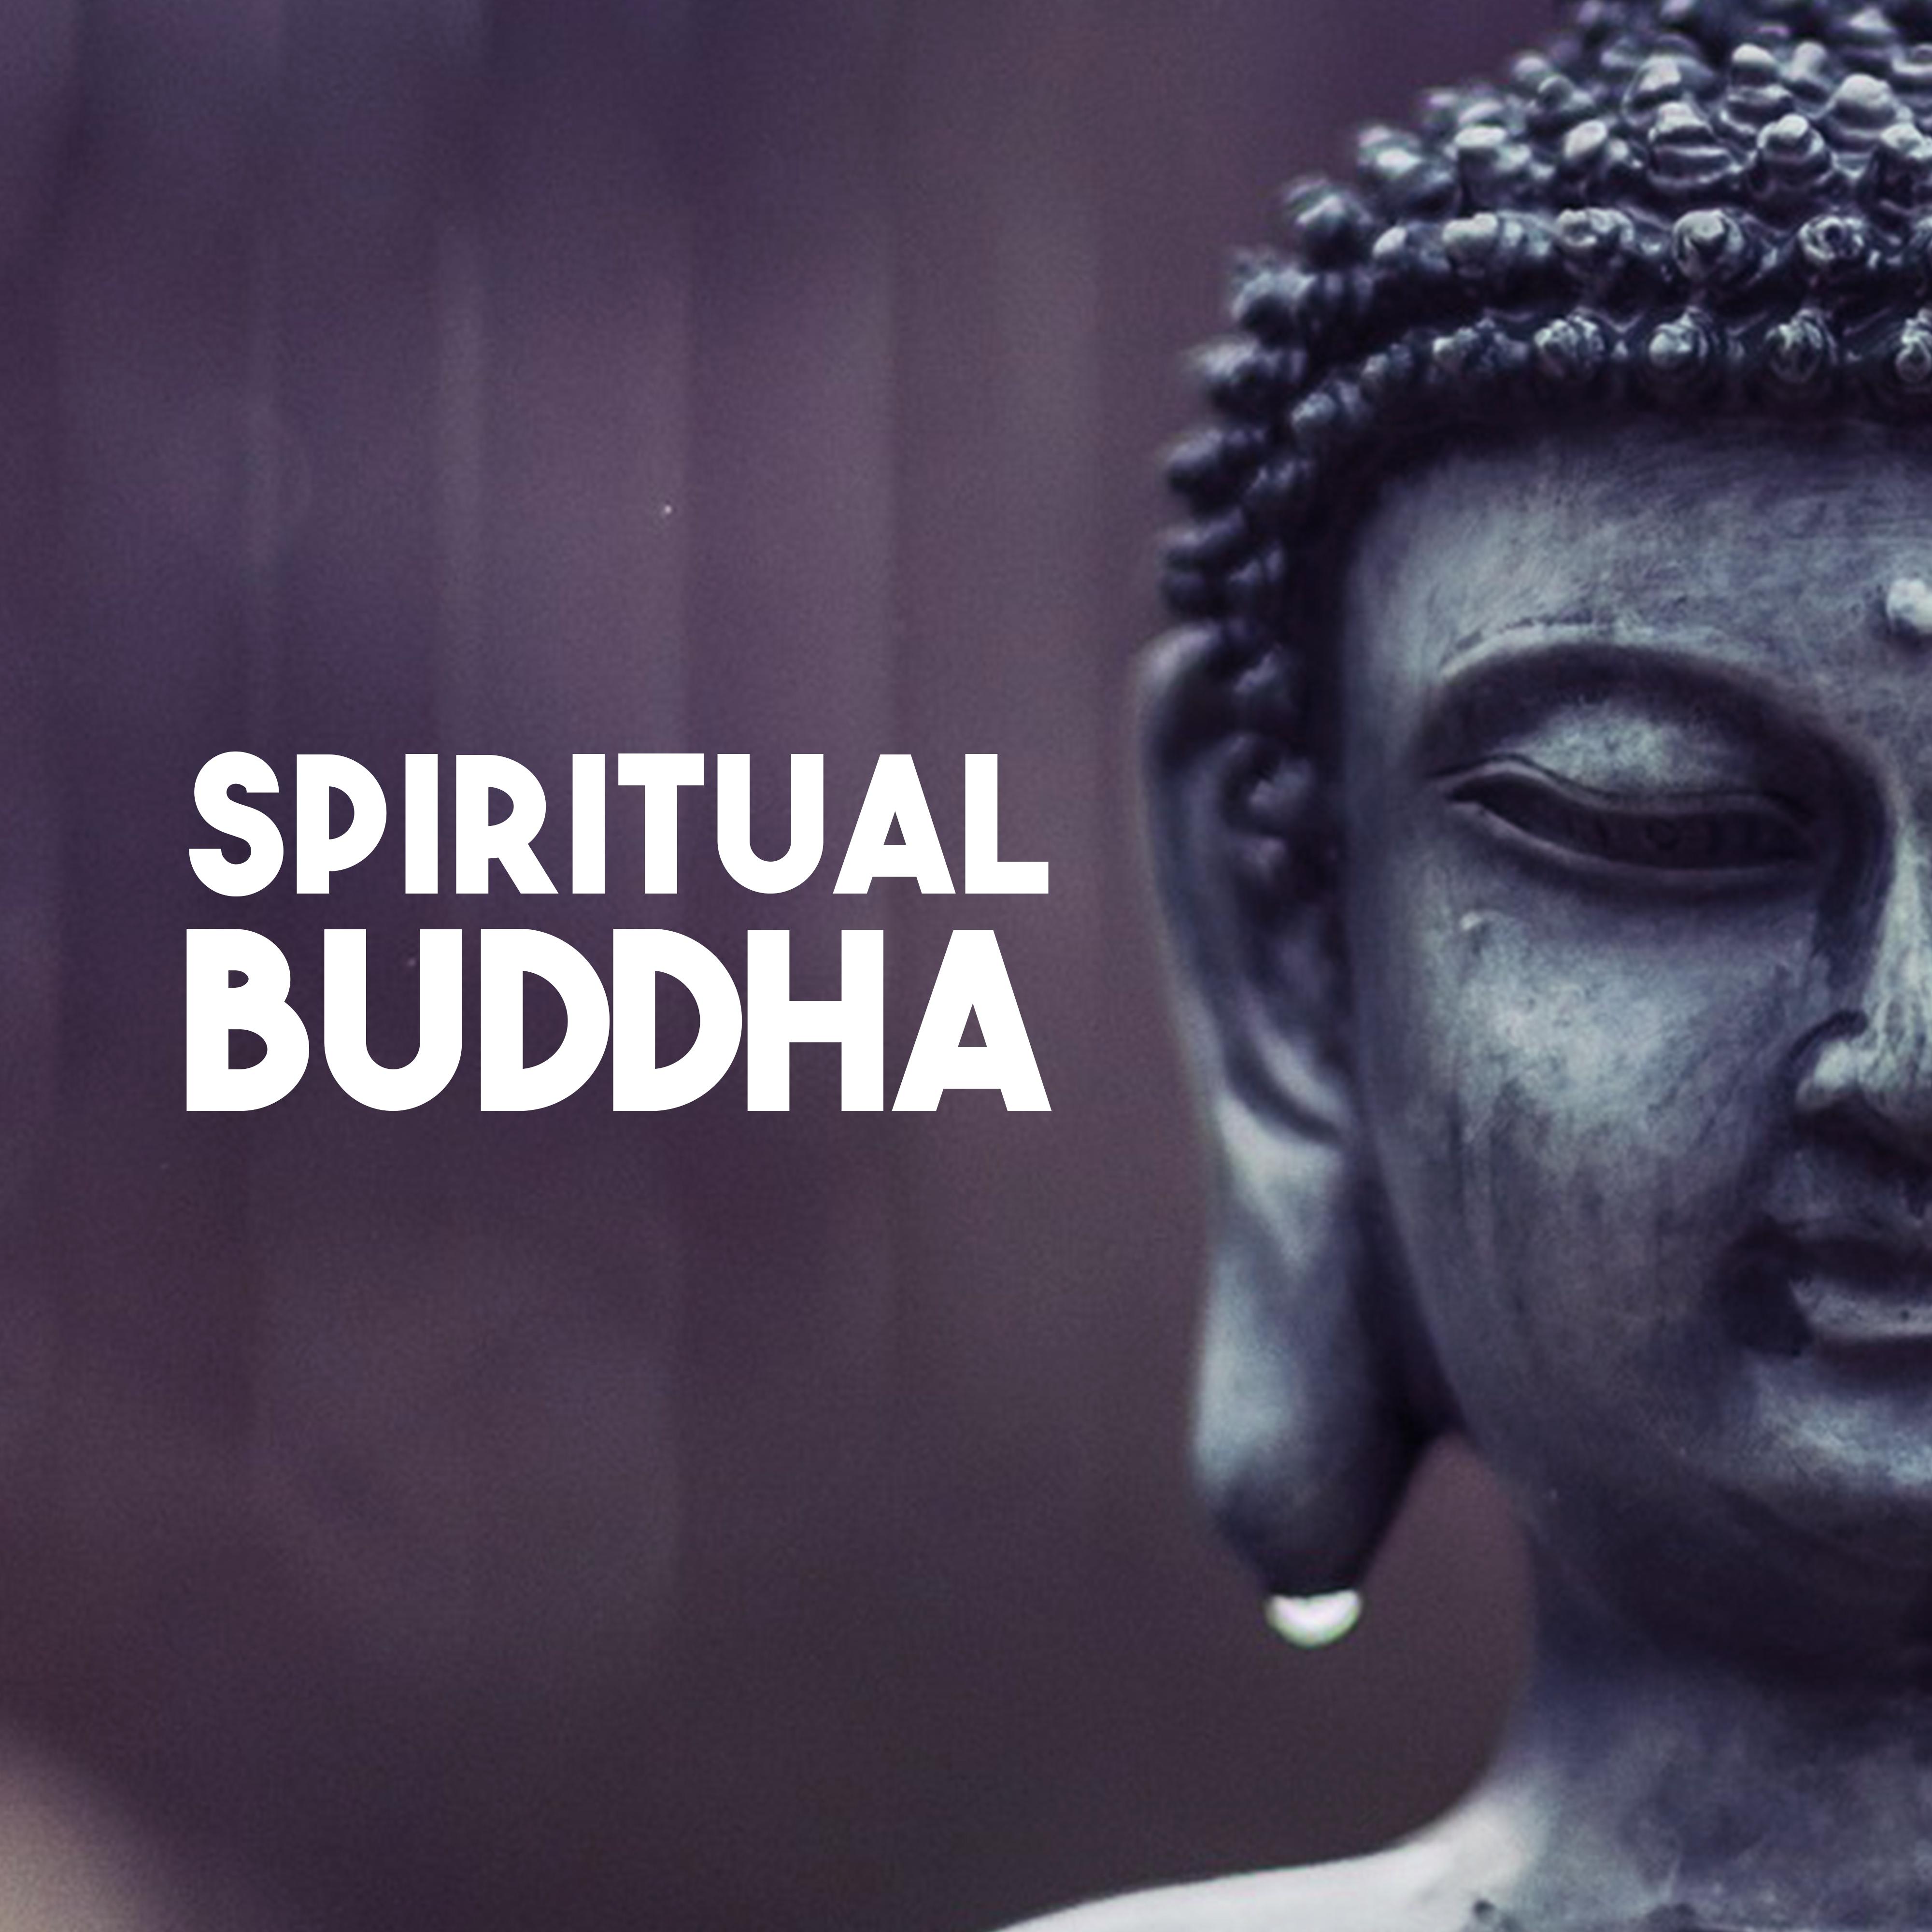 Spiritual Buddha  Music for Meditation, Deep Focus, Yoga Training, Soft Melodies, Harmony  Anti Stress Music